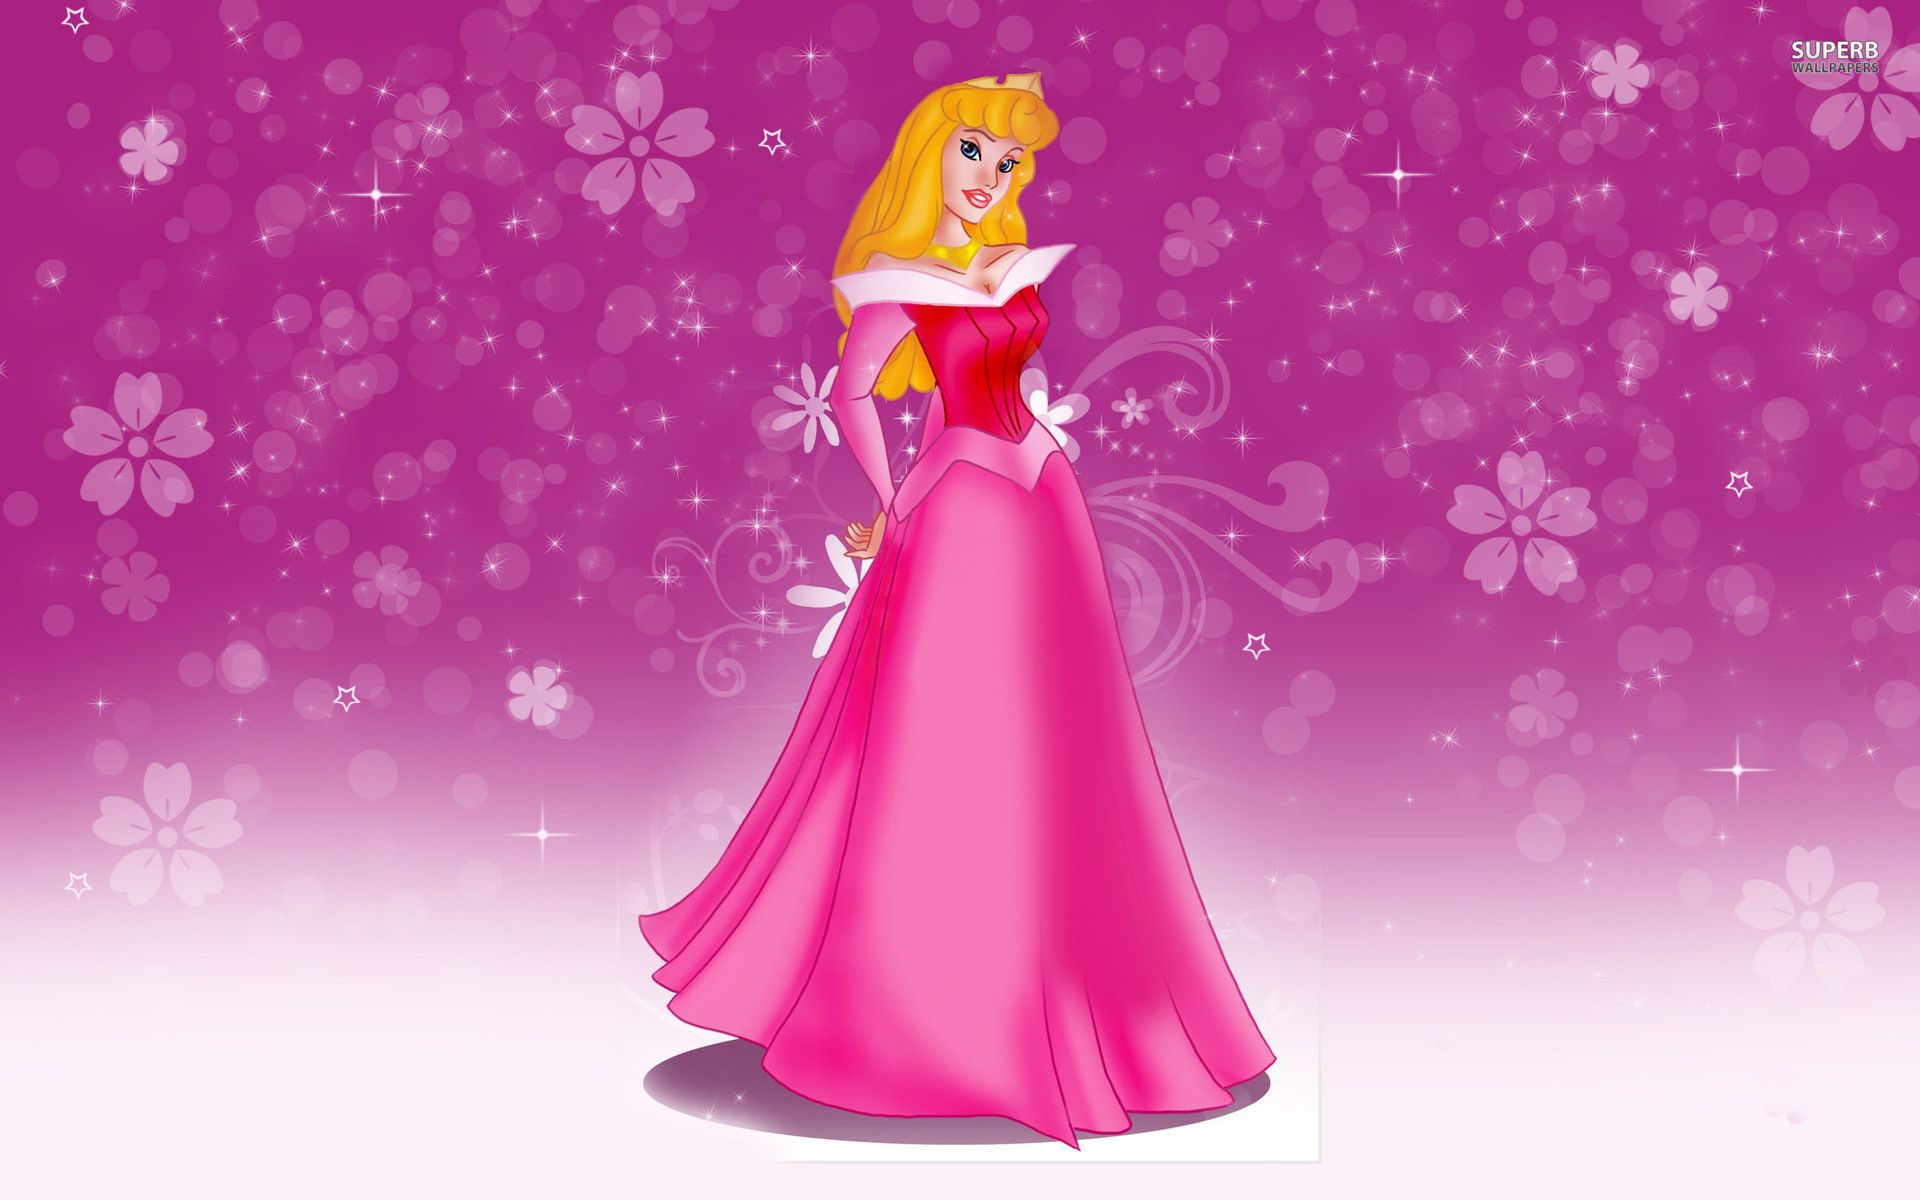 Disney Princess Sleeping Beauty 